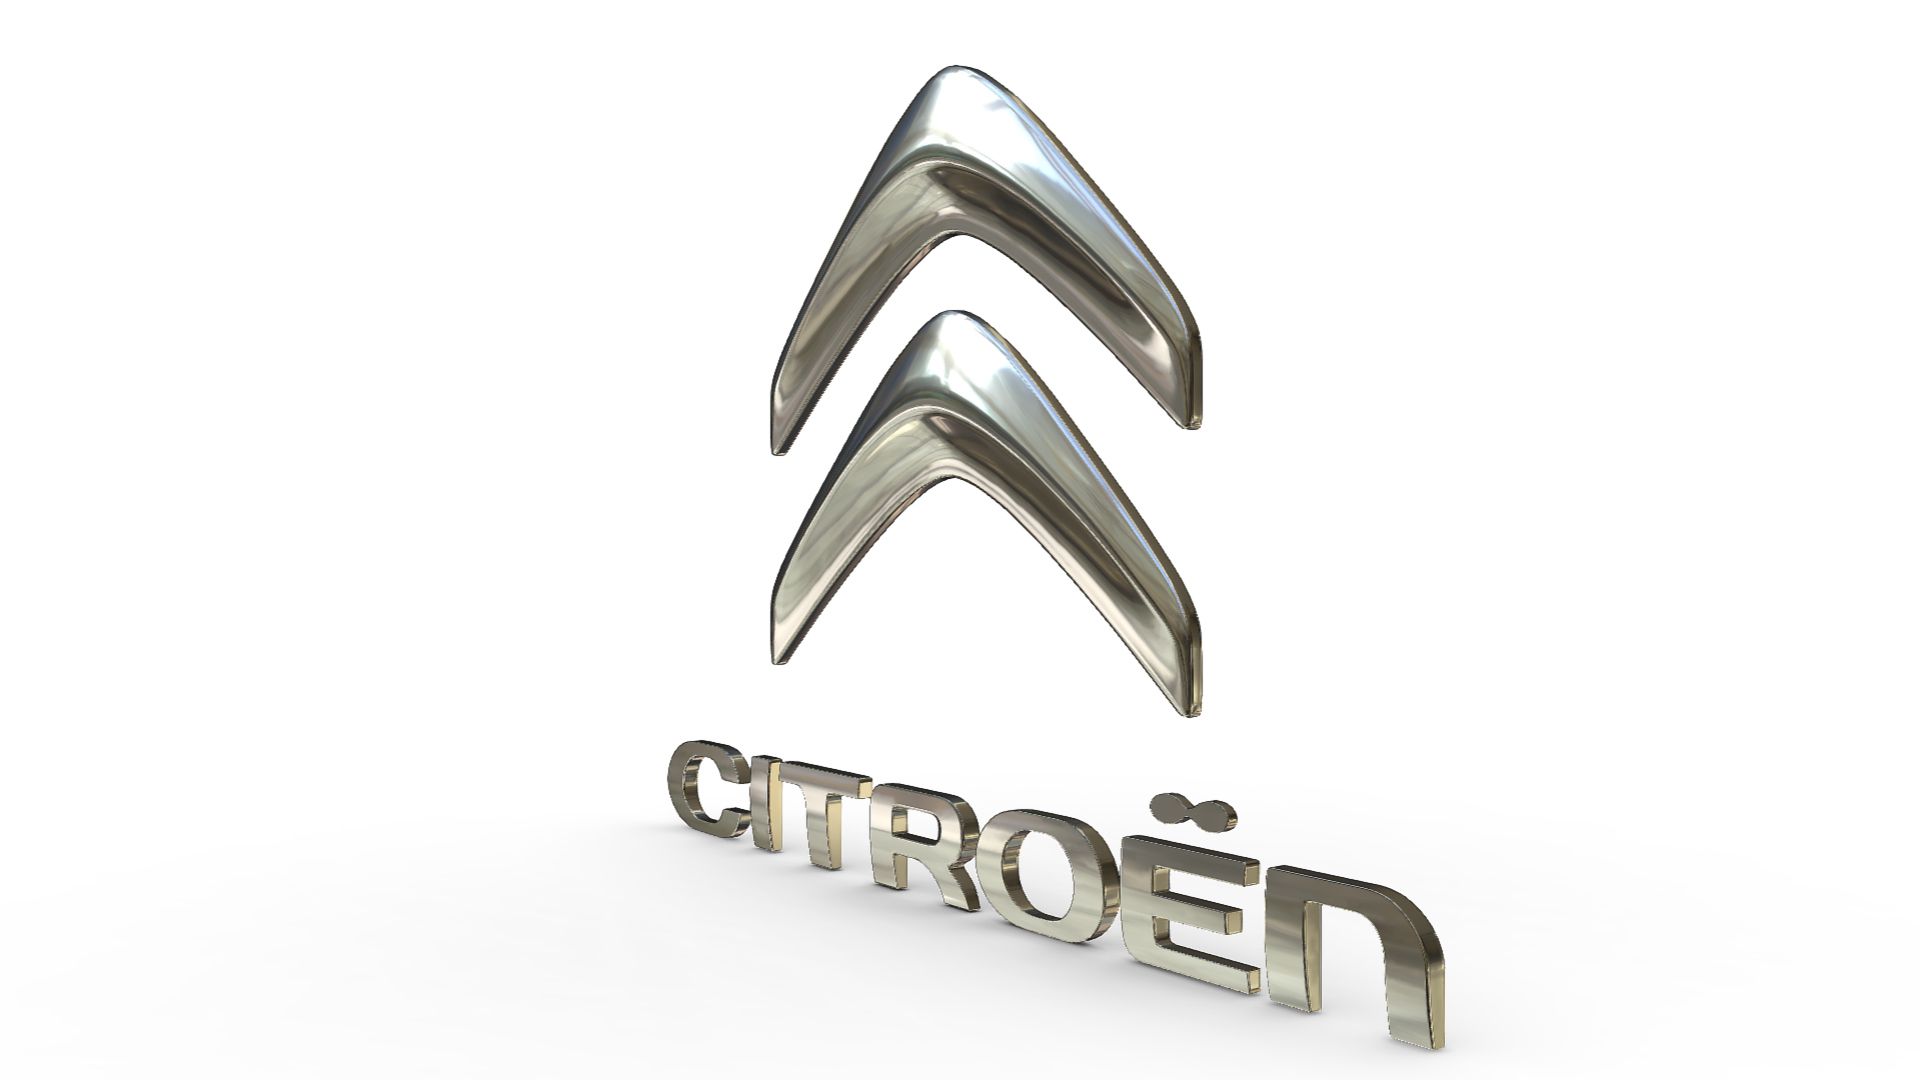 Citroen Logo Wallpapers